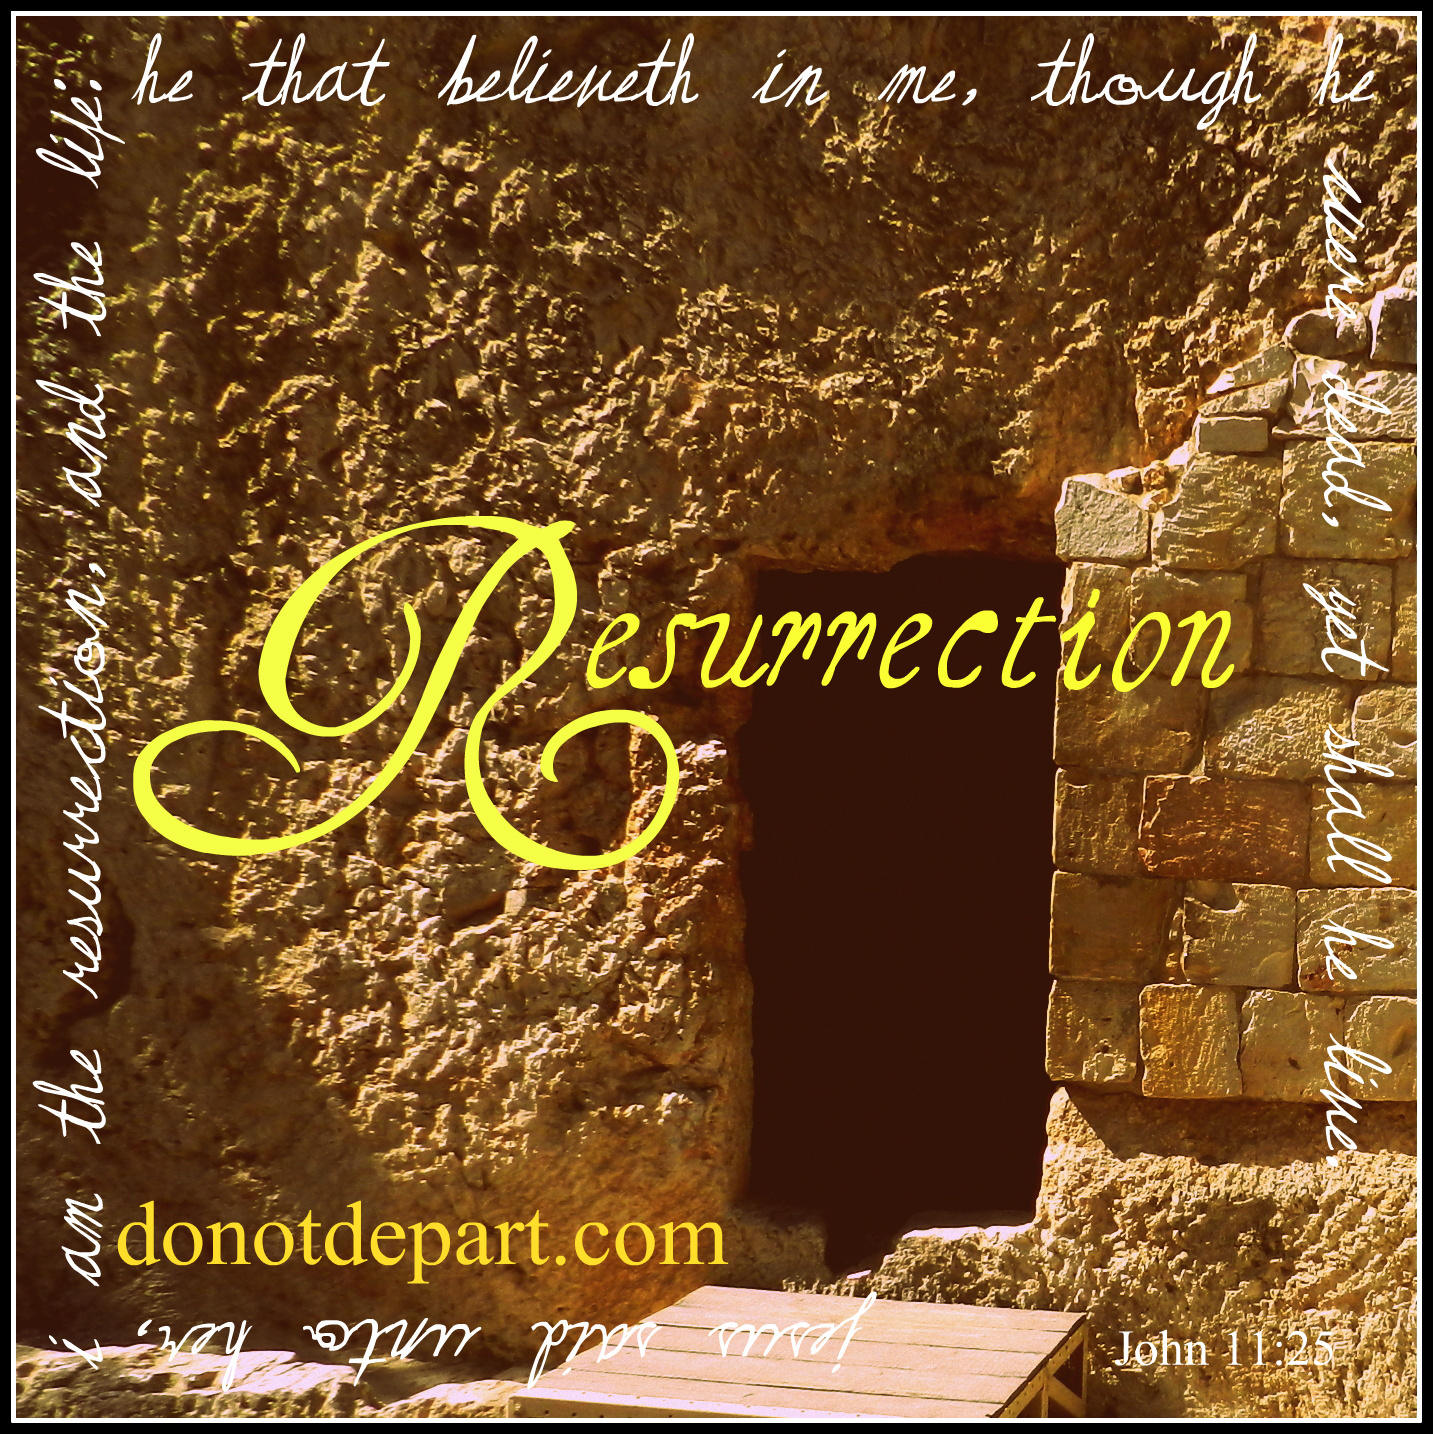 Resurrection Series on www.donotdepart.com